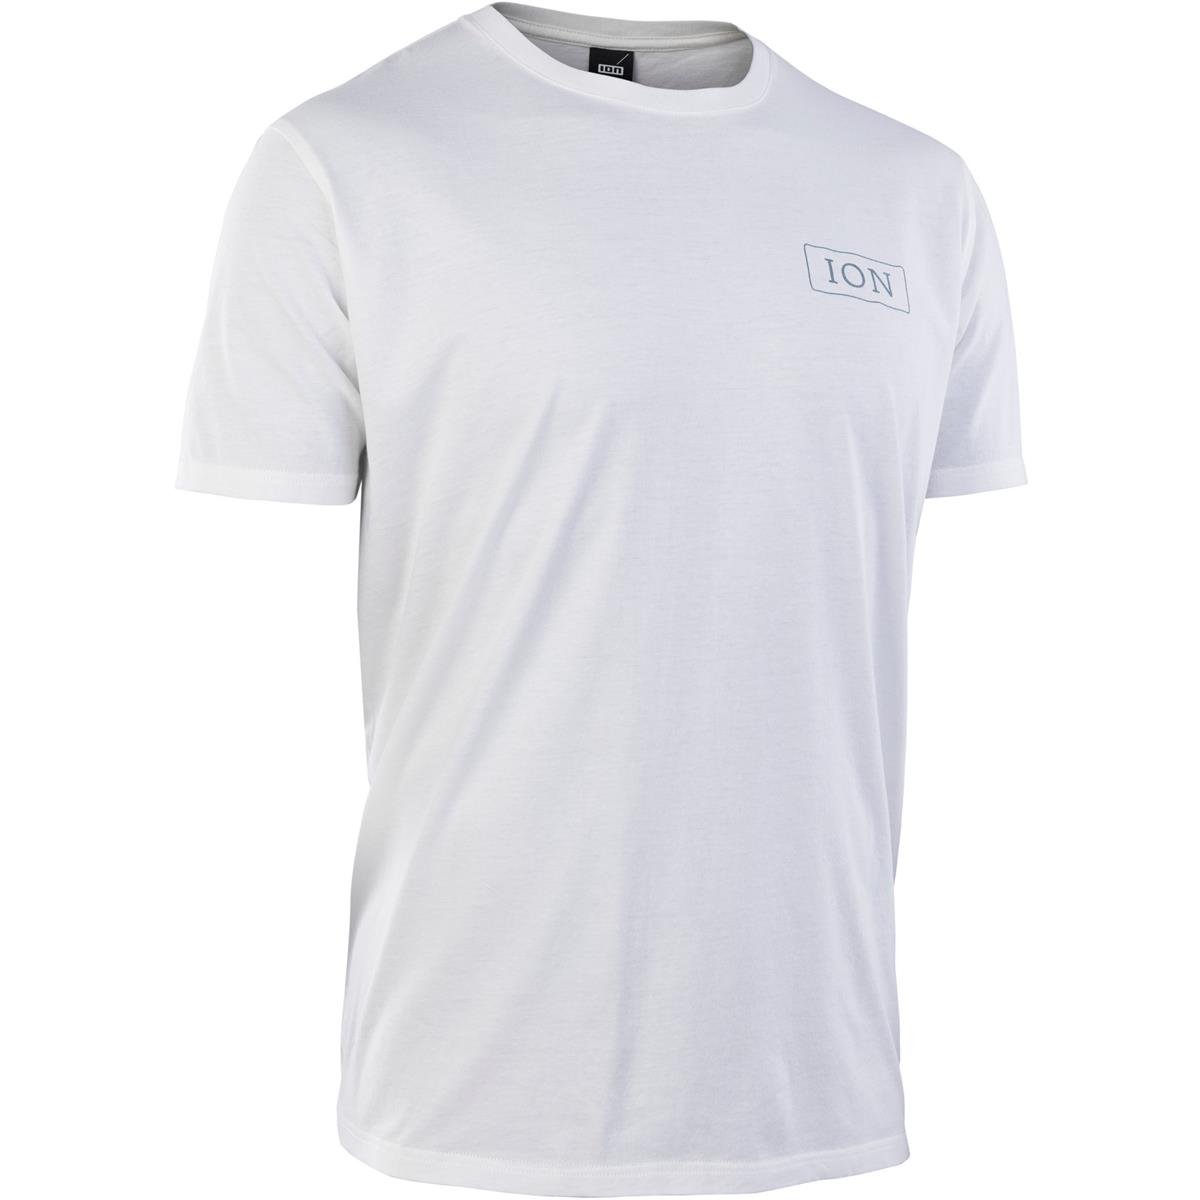 ION T-Shirt Addicted Peak White